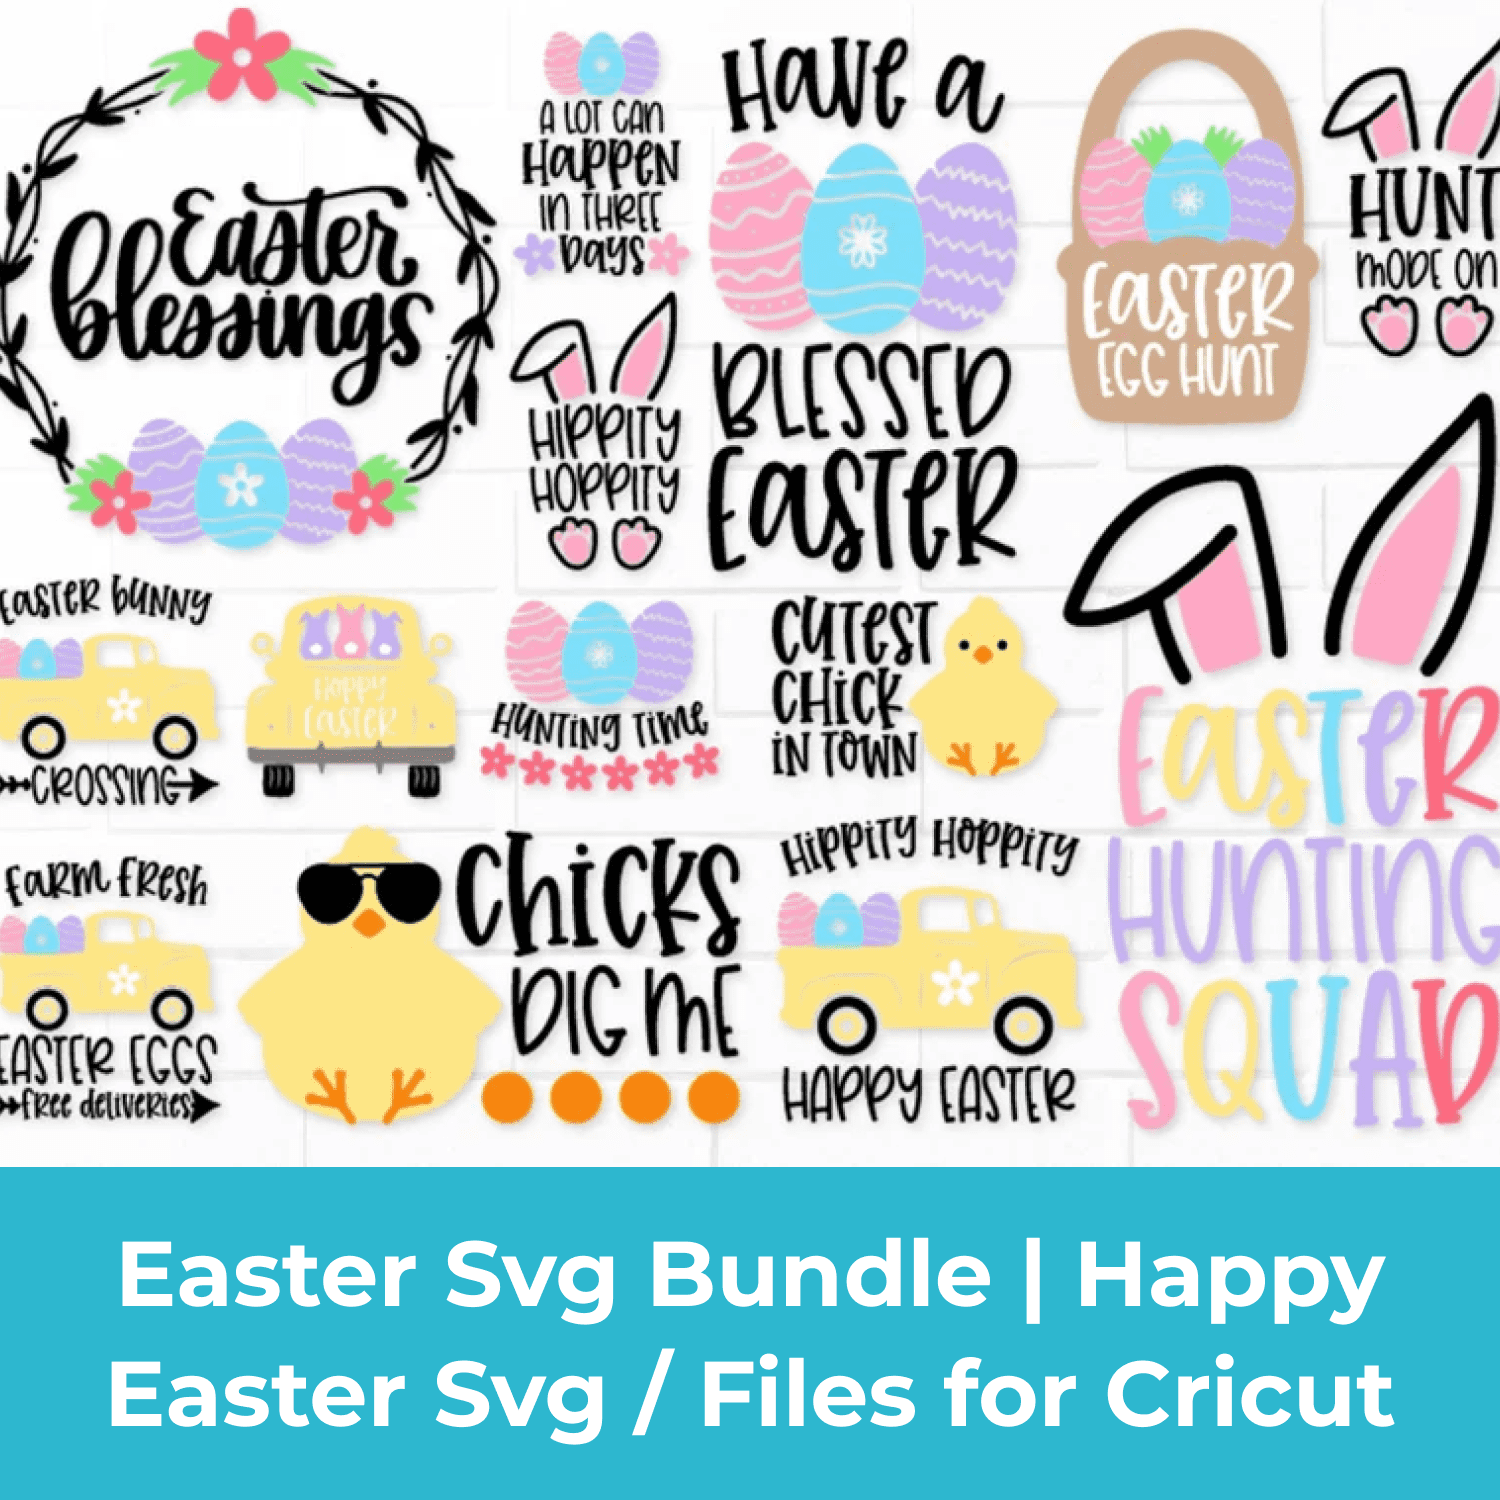 Easter Svg Bundle | Happy Easter Svg | Files for Cricut cover.